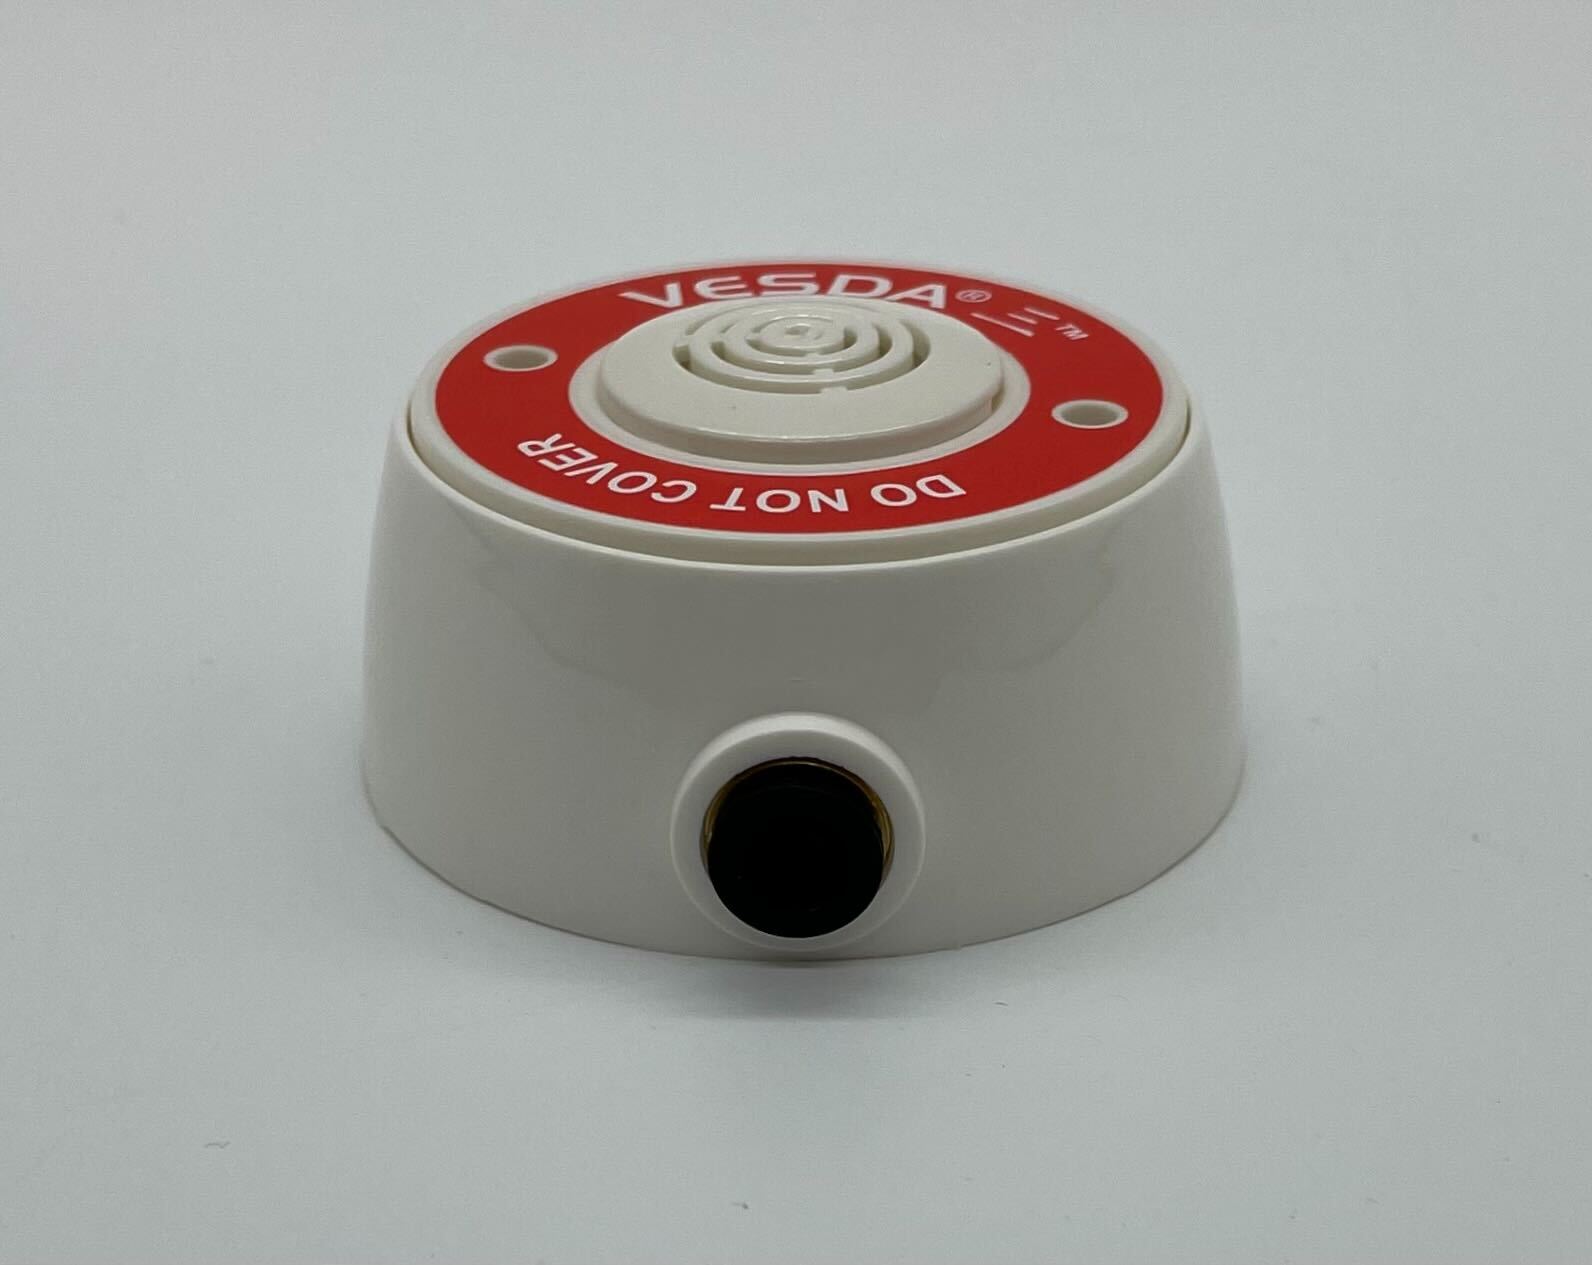 Vesda VSP-982-W22 - The Fire Alarm Supplier